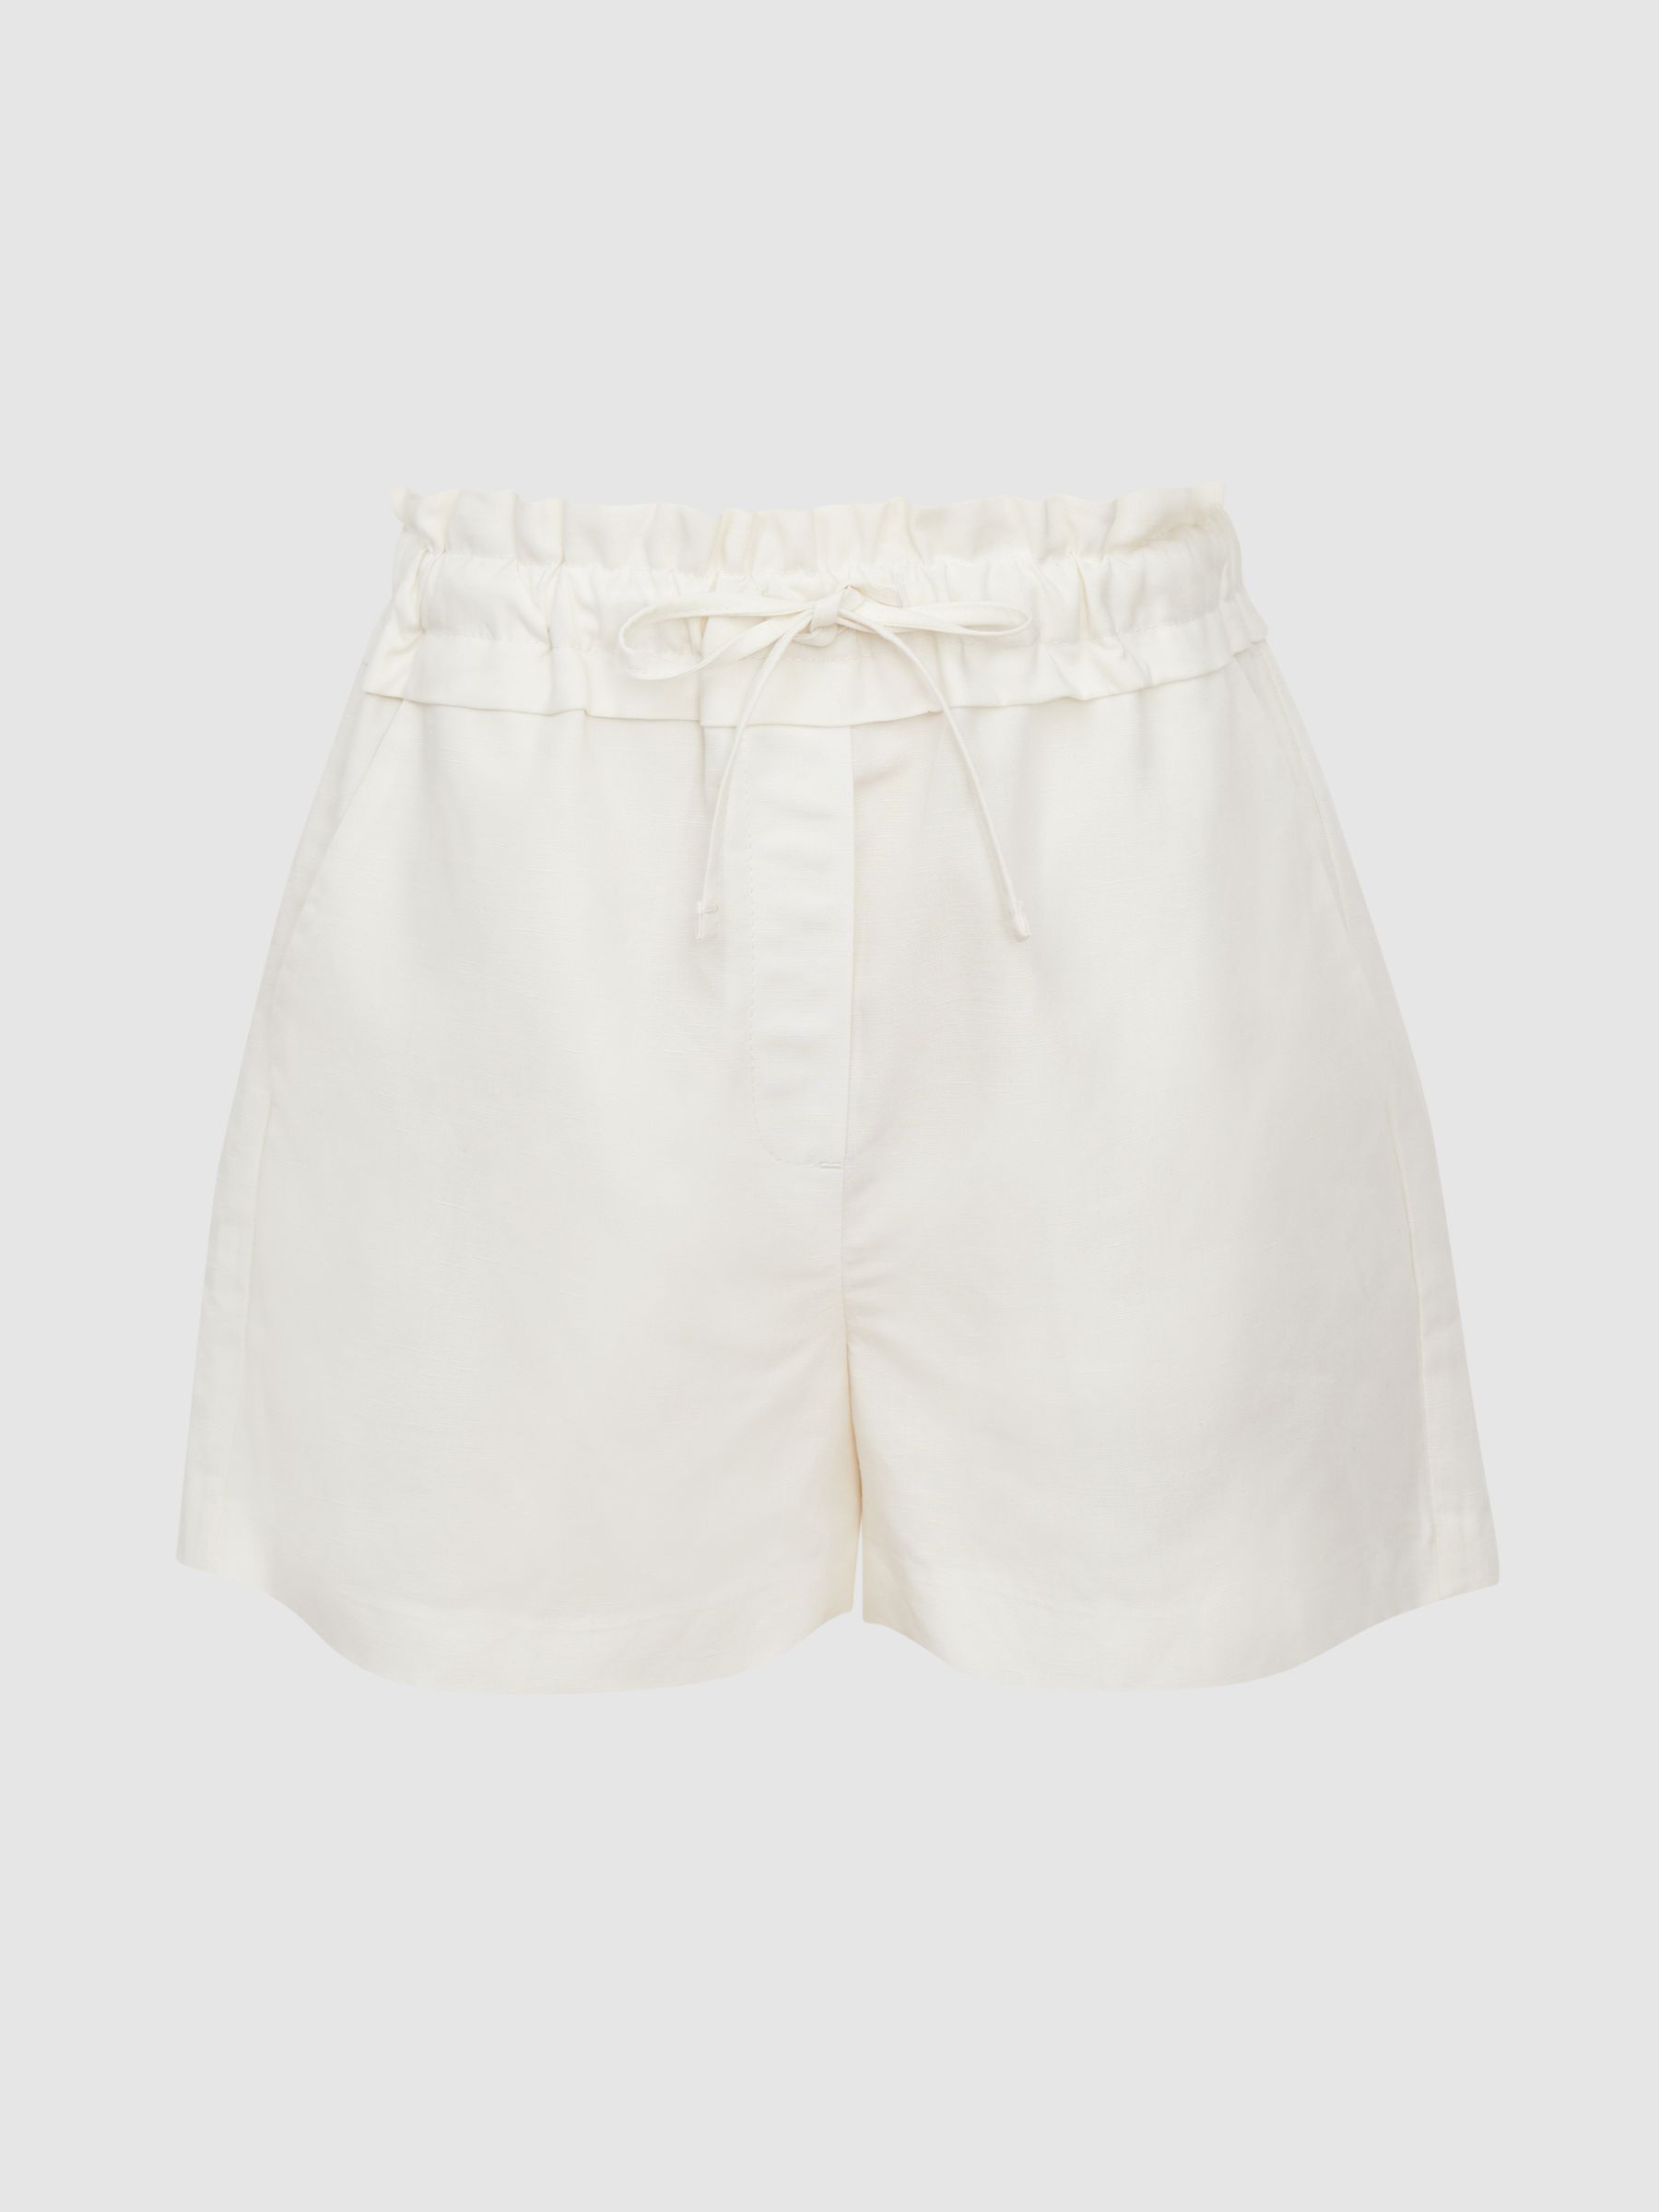 Reiss Macey Linen Pull On Shorts - REISS